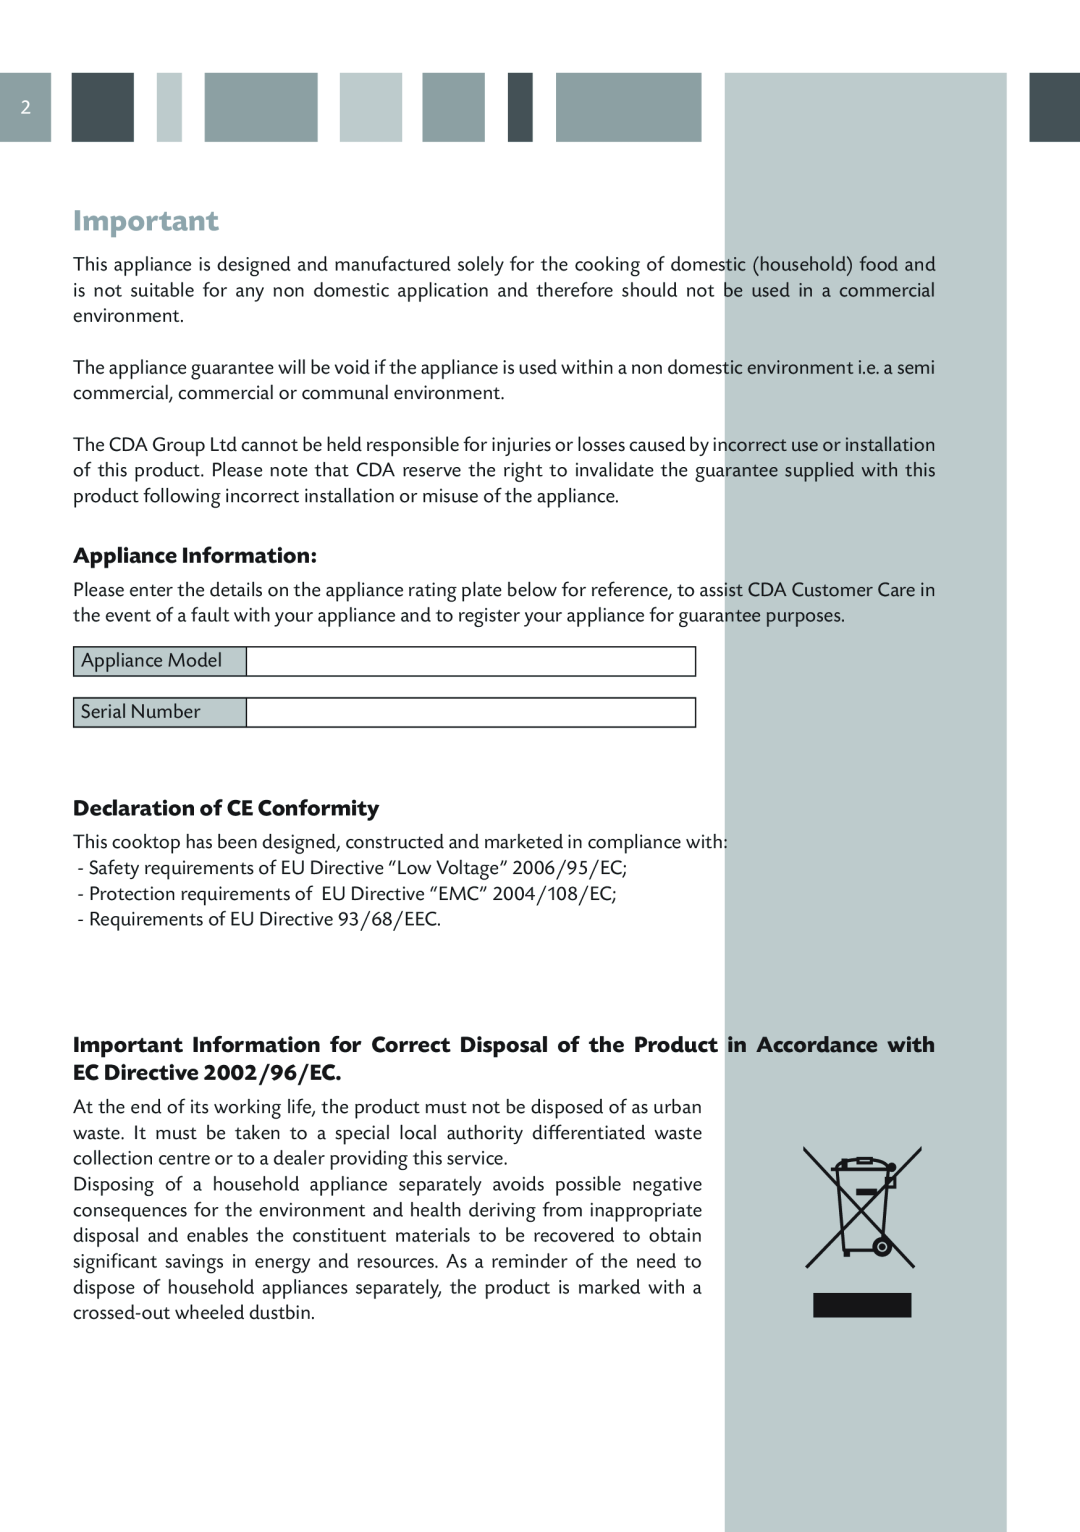 CDA HVN 32 manual Appliance Information, Declaration of CE Conformity 